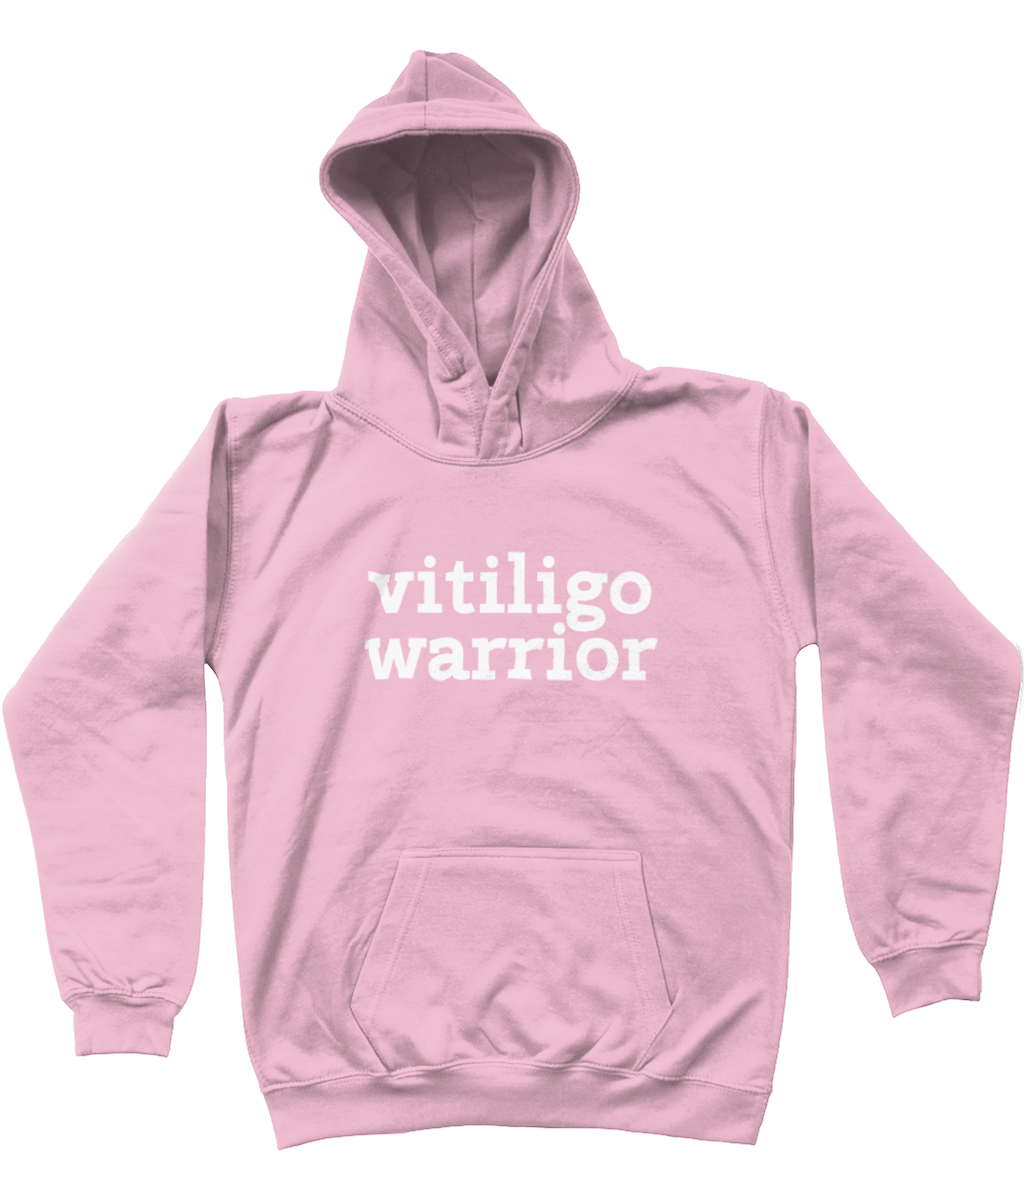 vitiligo warrior Kids Hoodie